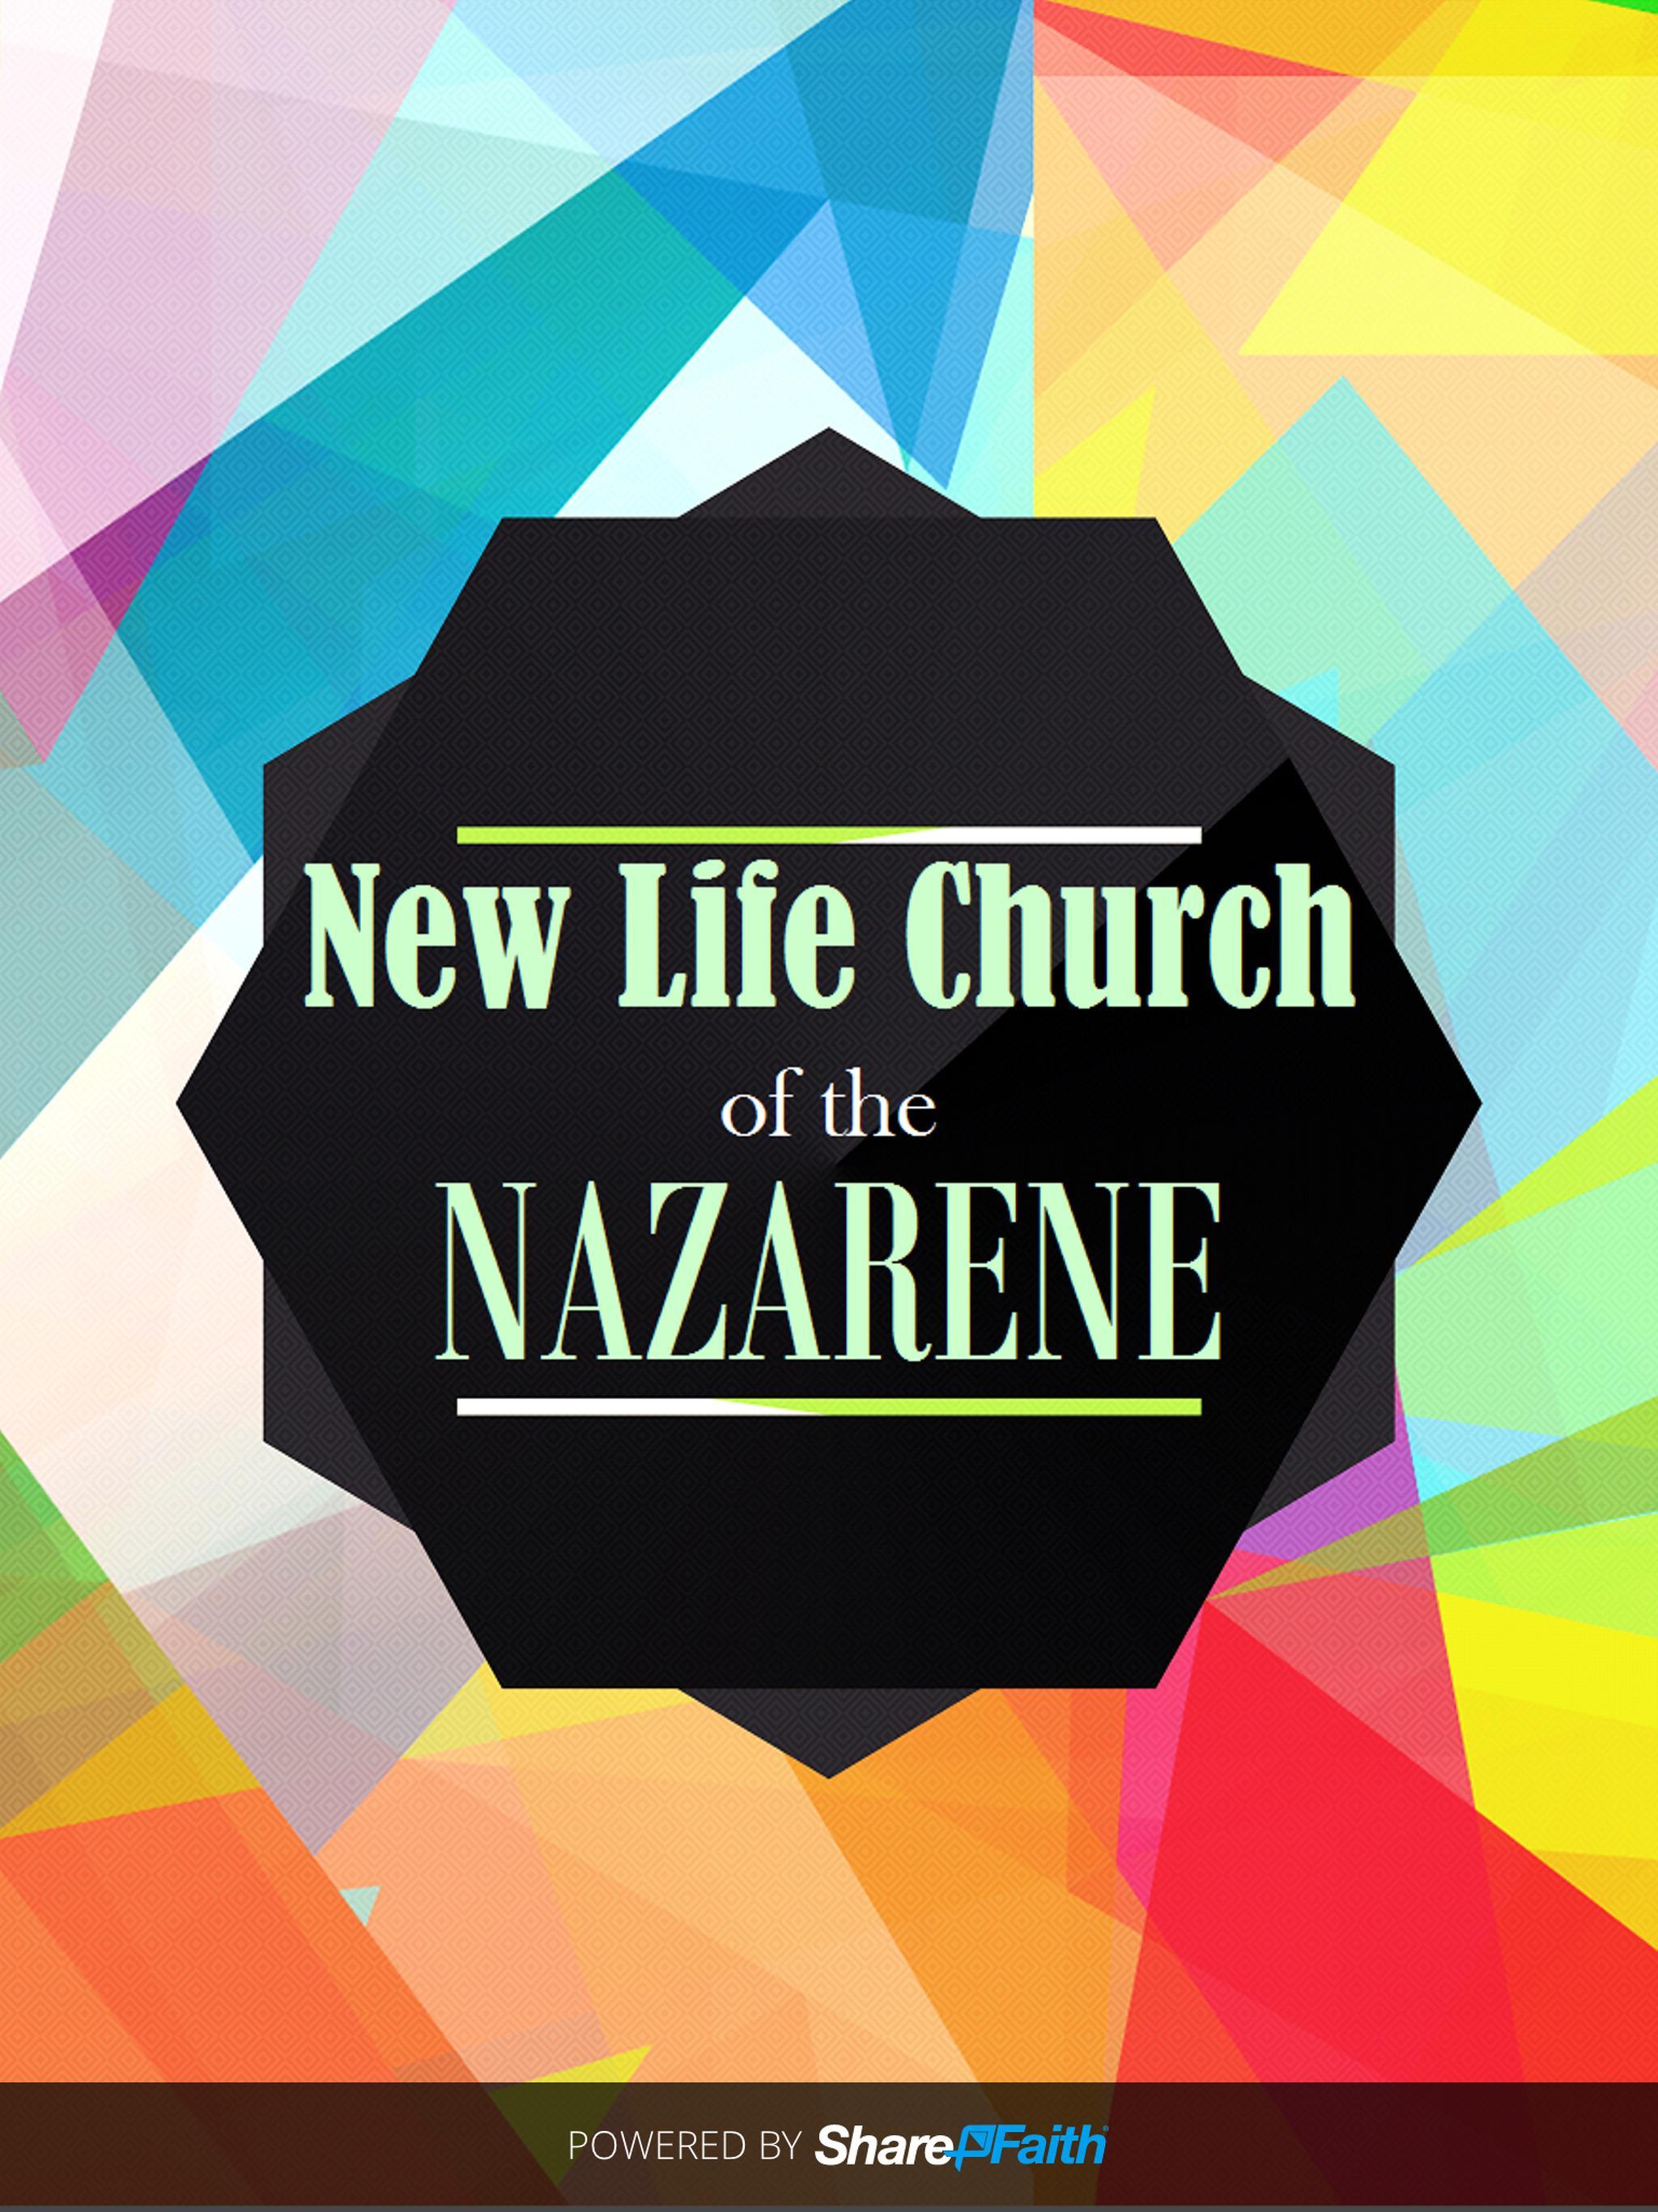 New Life Church. The New Life. New Life компания. New Life description. New life на русском